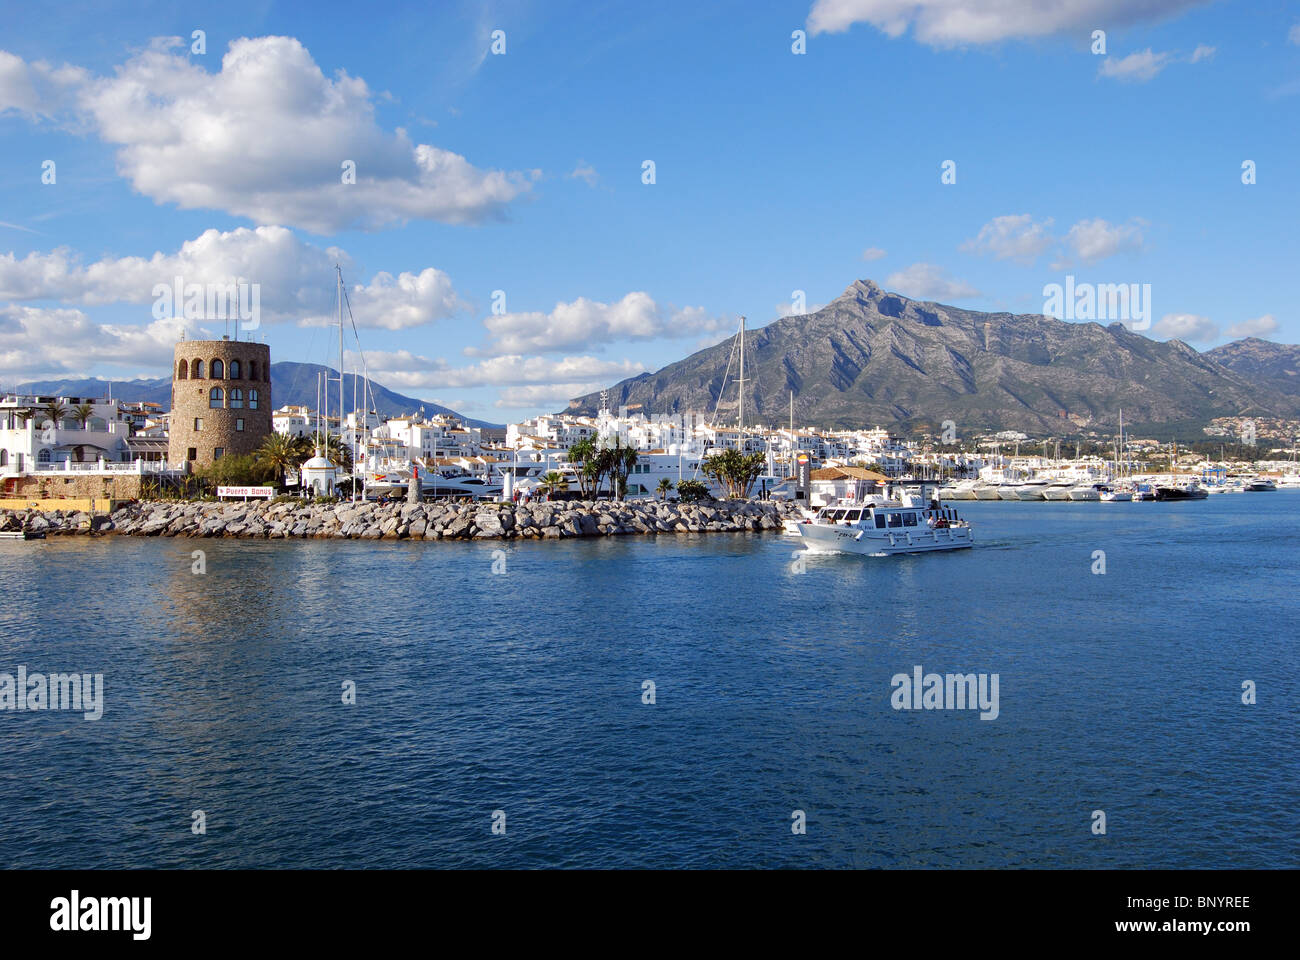 View of the harbour area, Puerto Banus, Marbella, Costa del Sol, Malaga Province, Andalucia, Spain, Western Europe. Stock Photo